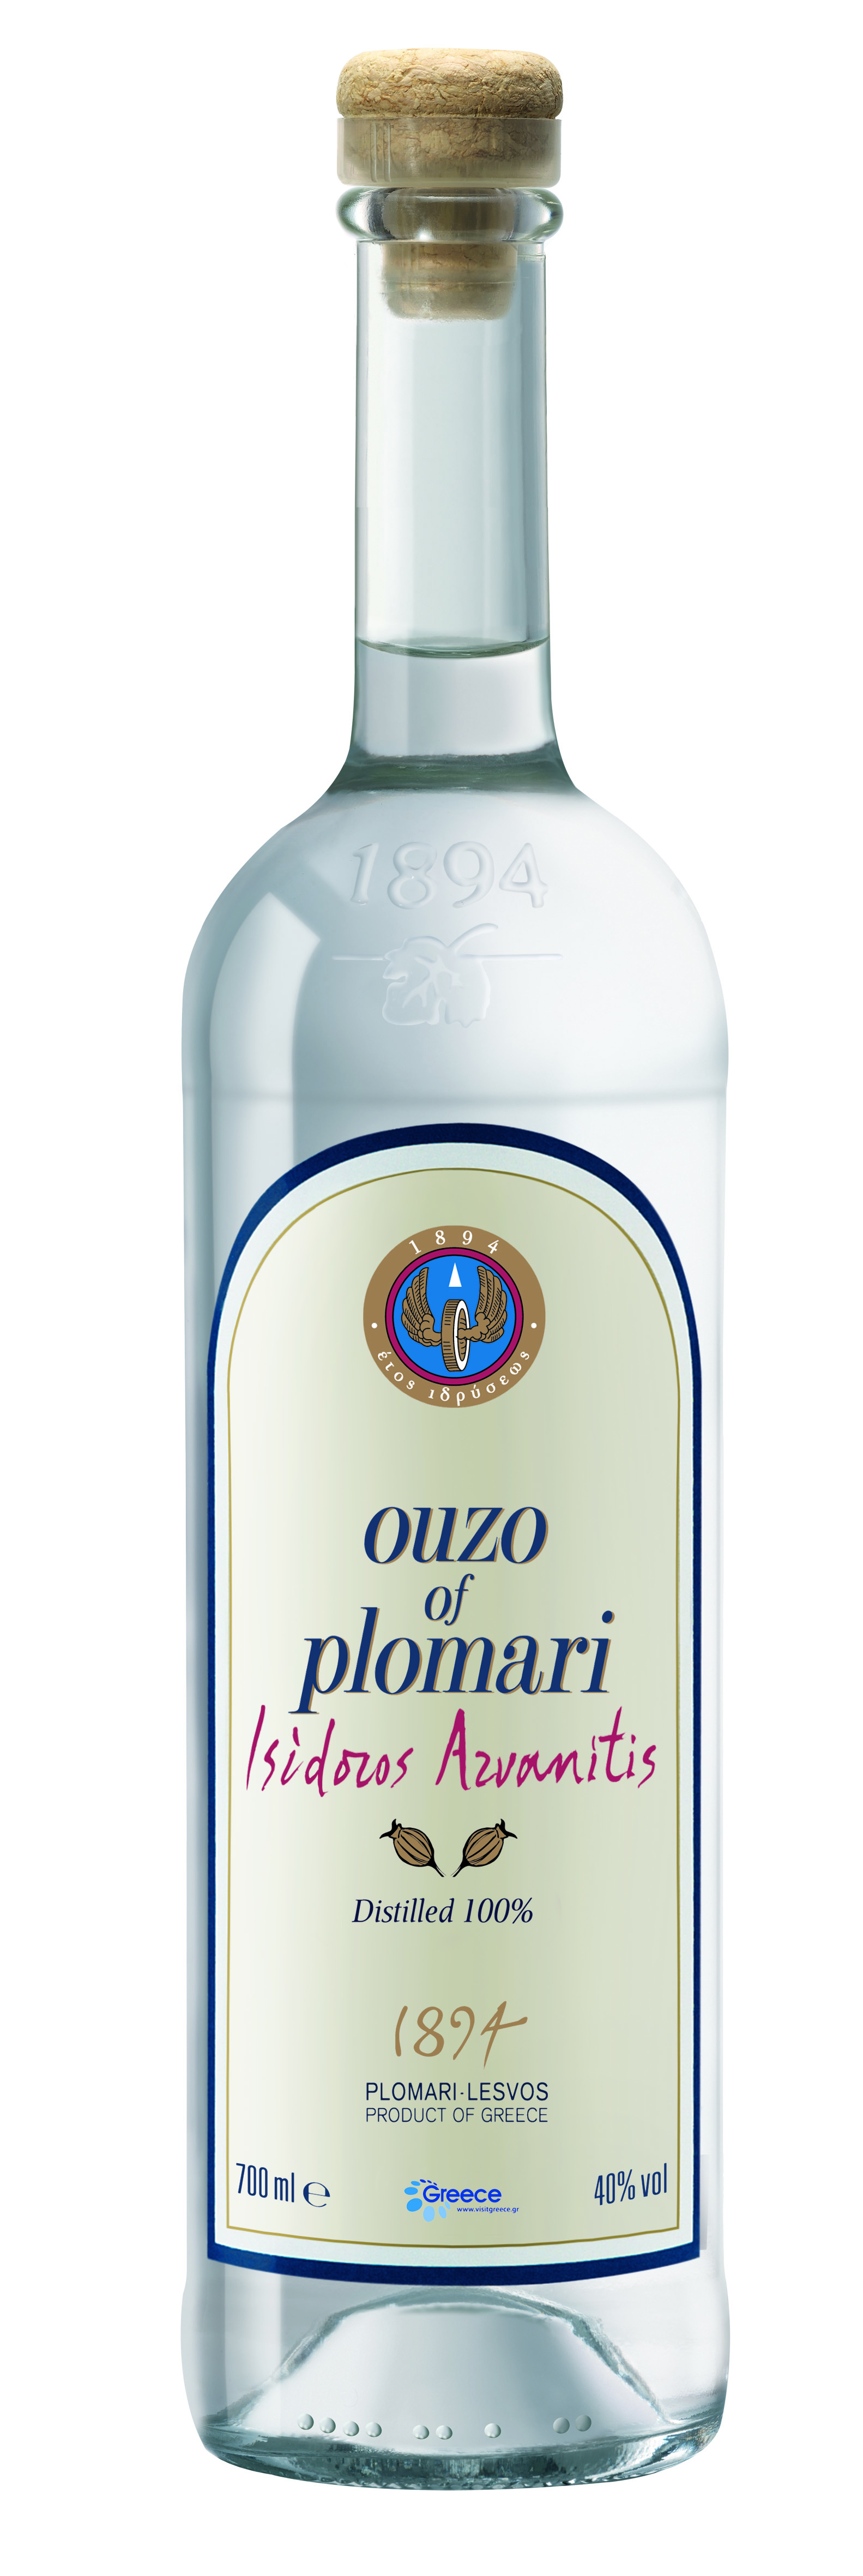 Ouzo Plomari Issidoros Arvanitis Metaxa, 40% Weinversand 0.7L Weine, Ouzo, Olivenöl Shop-Kreta ~ 